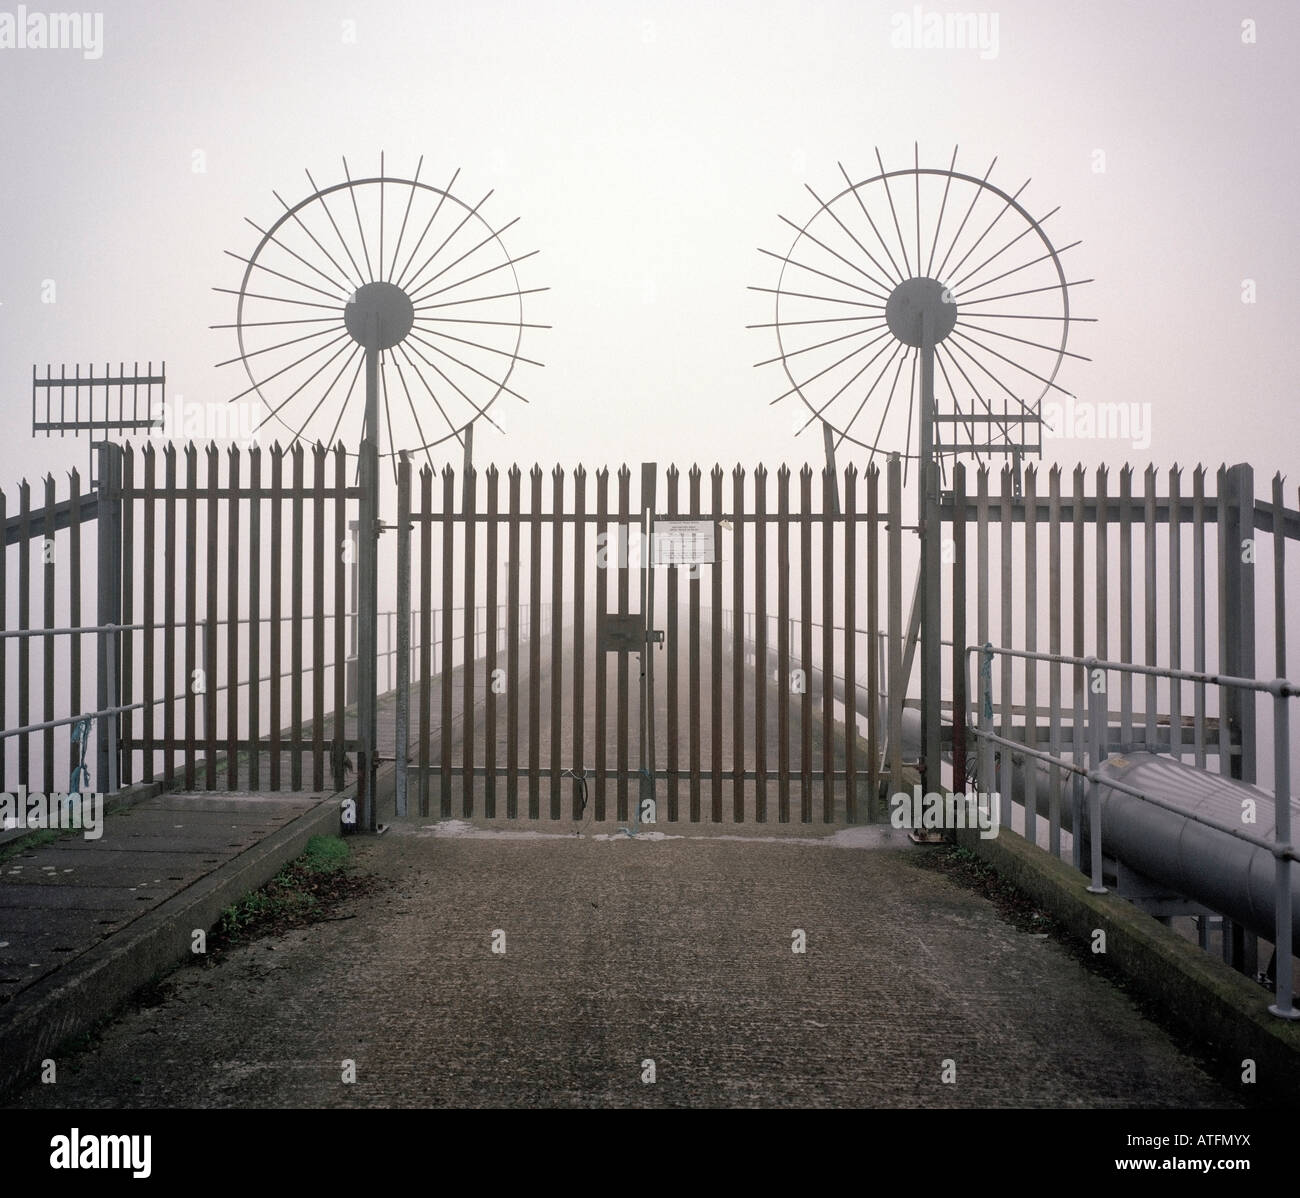 Galvanized gates with circular anti climb spikes London England UK Stock Photo